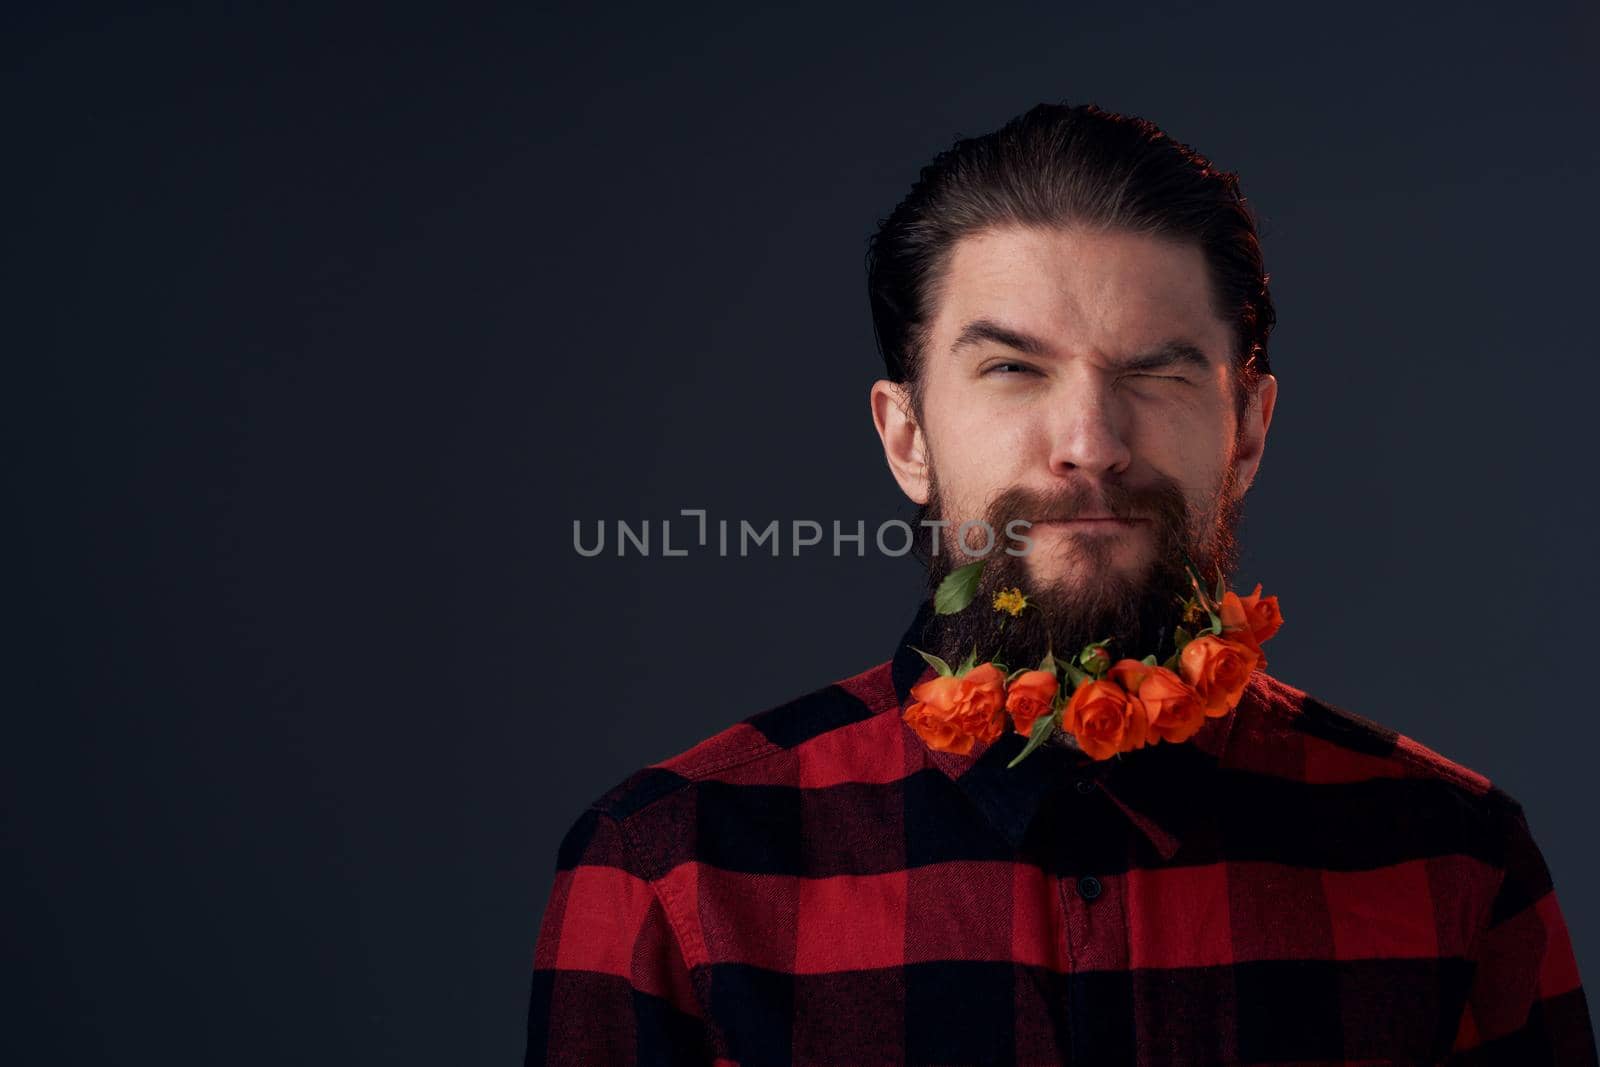 Cute bearded man flowers decoration plaid shirt emotions. High quality photo